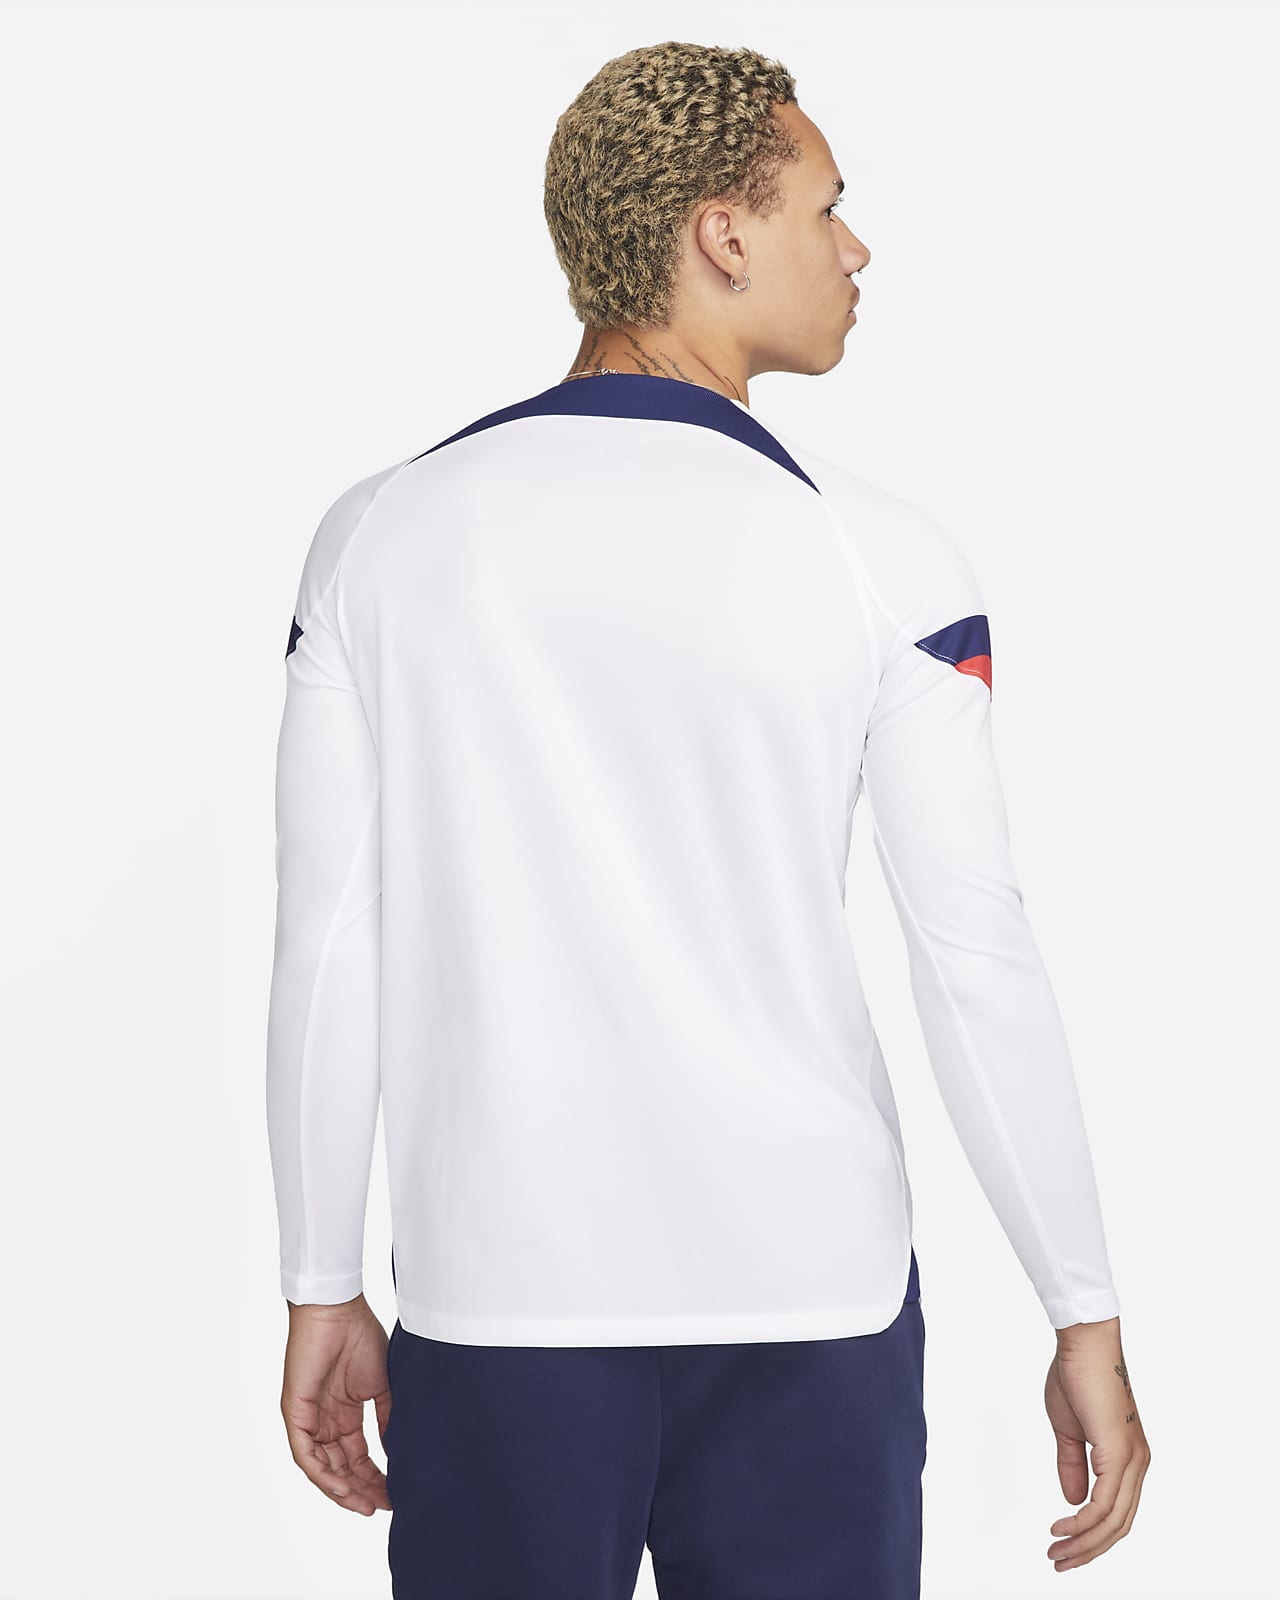 Nike Authentics Men's Warm-Up Shirt.